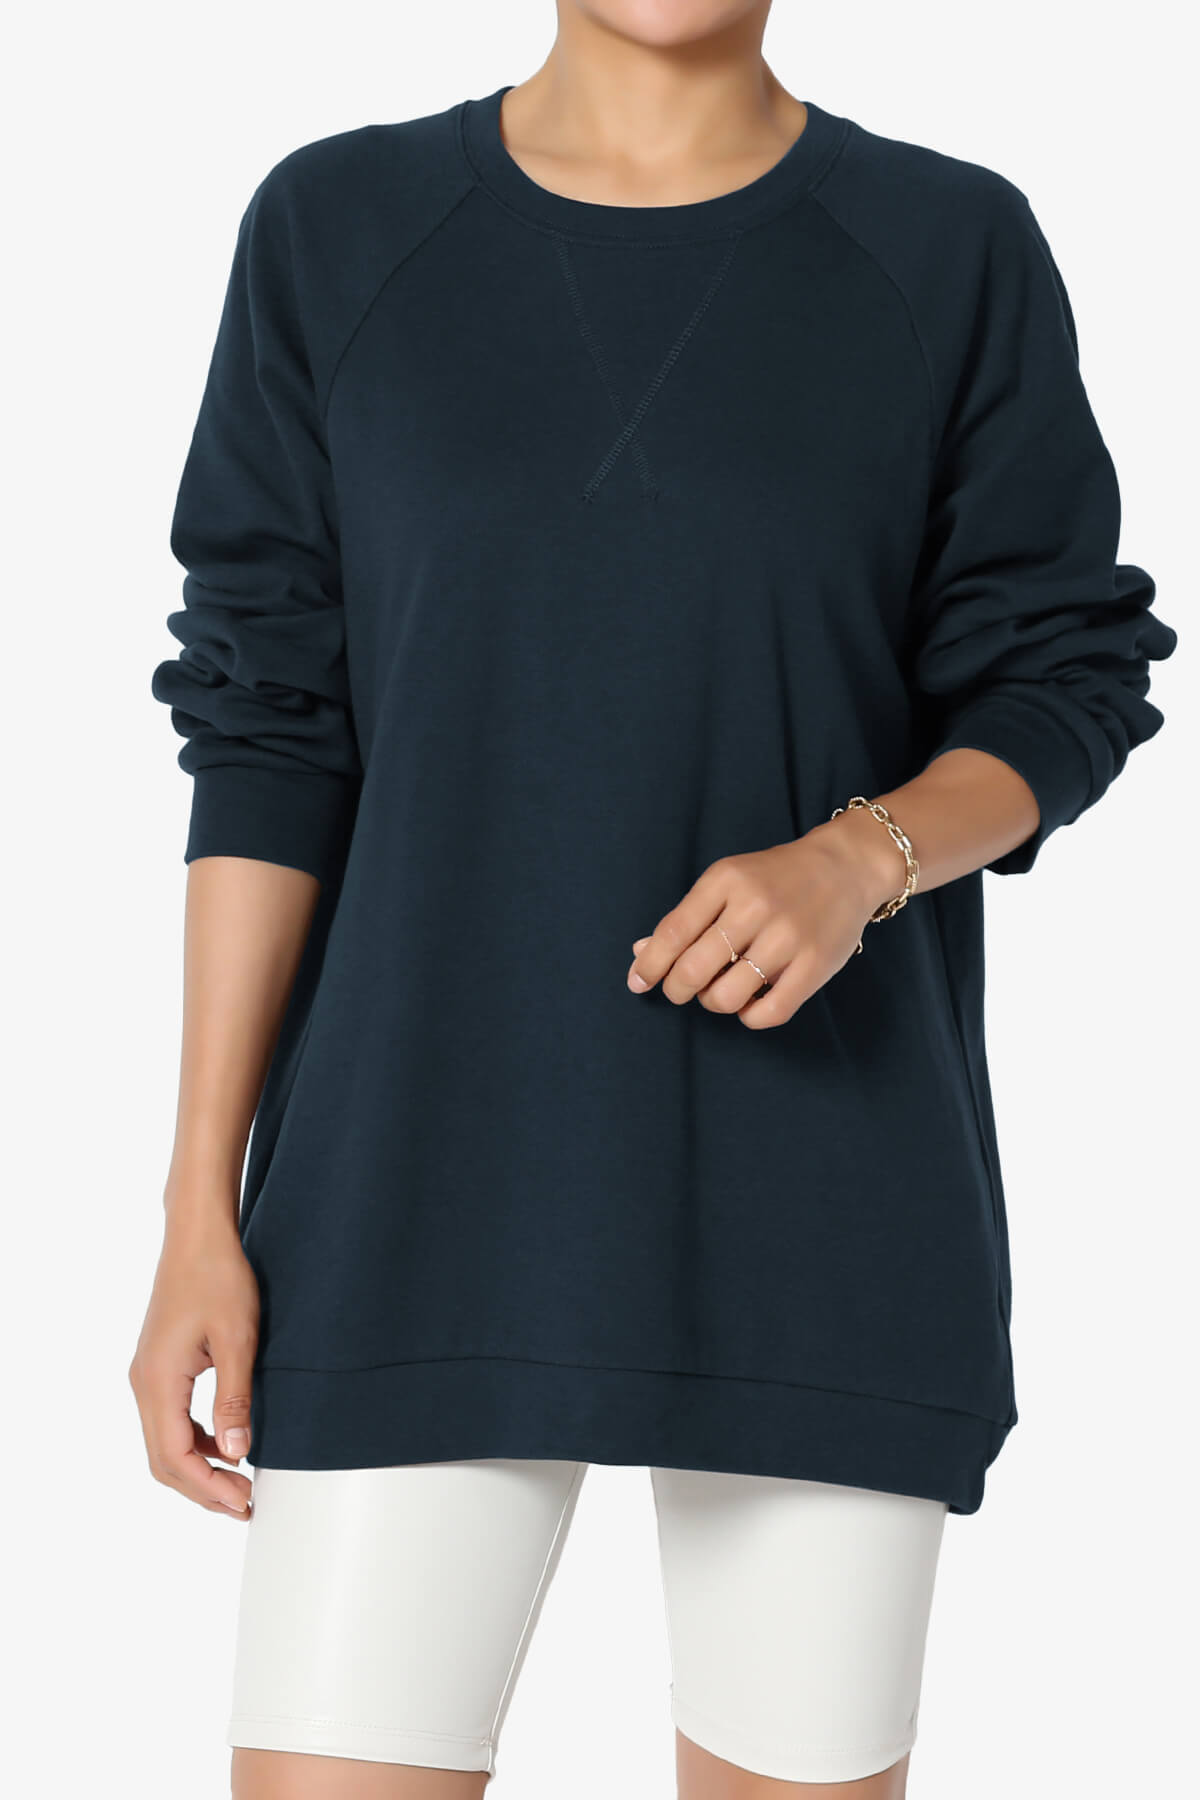 Carlene Cotton Raglan Sleeve Pullover Top DARK NAVY_1